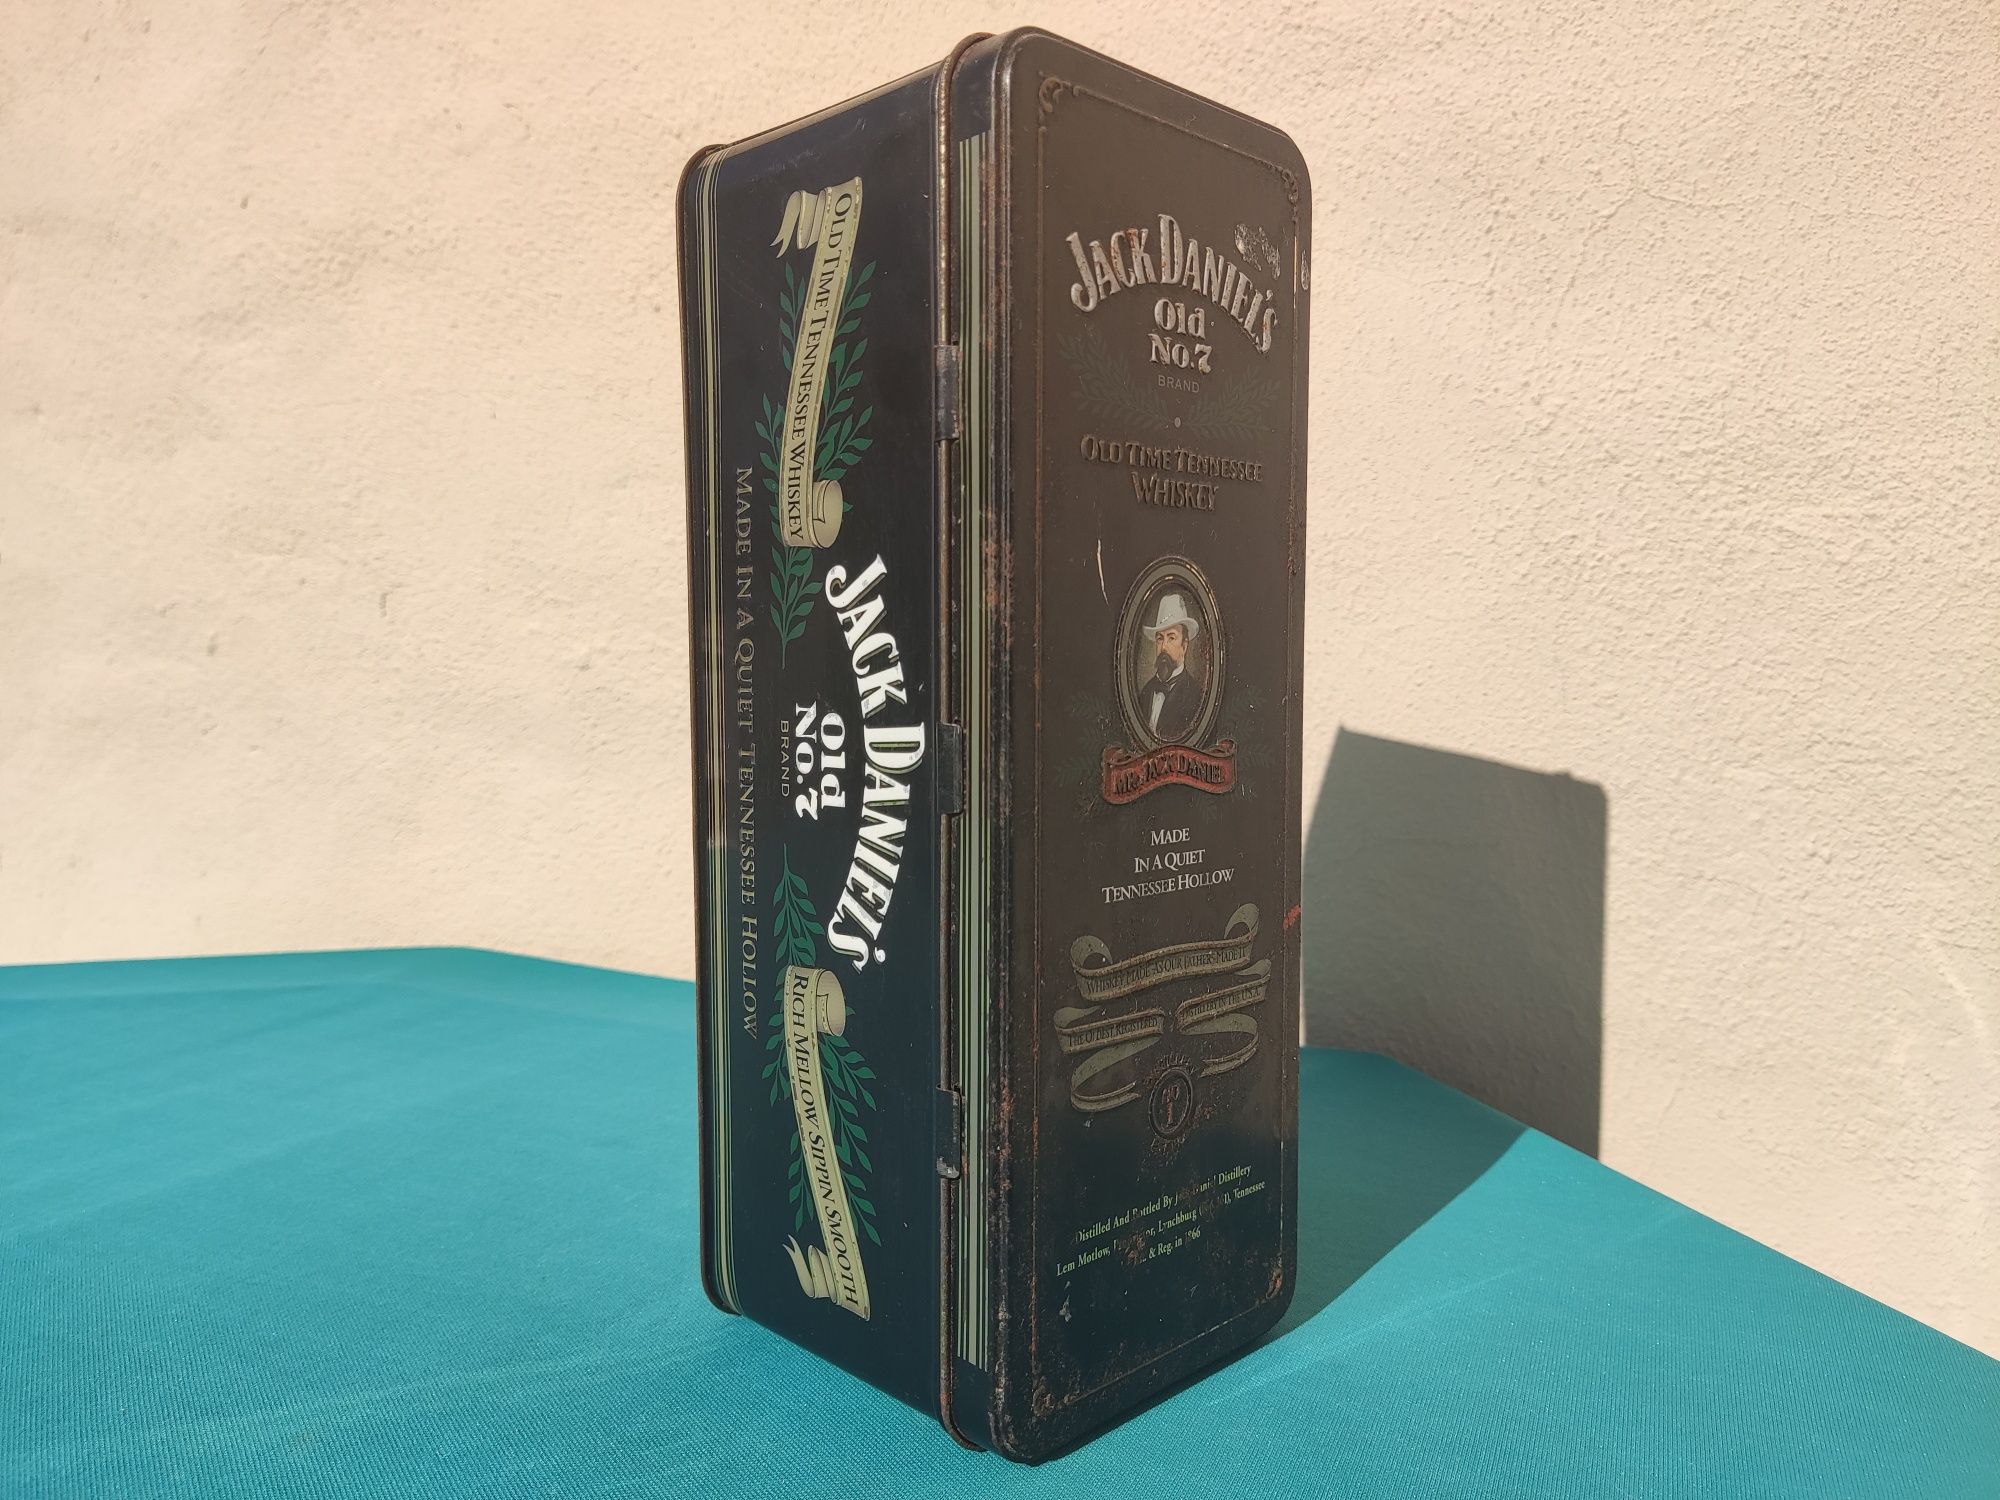 Lata antiga de whisky "Jack Daniel's old no. 7" - vintage